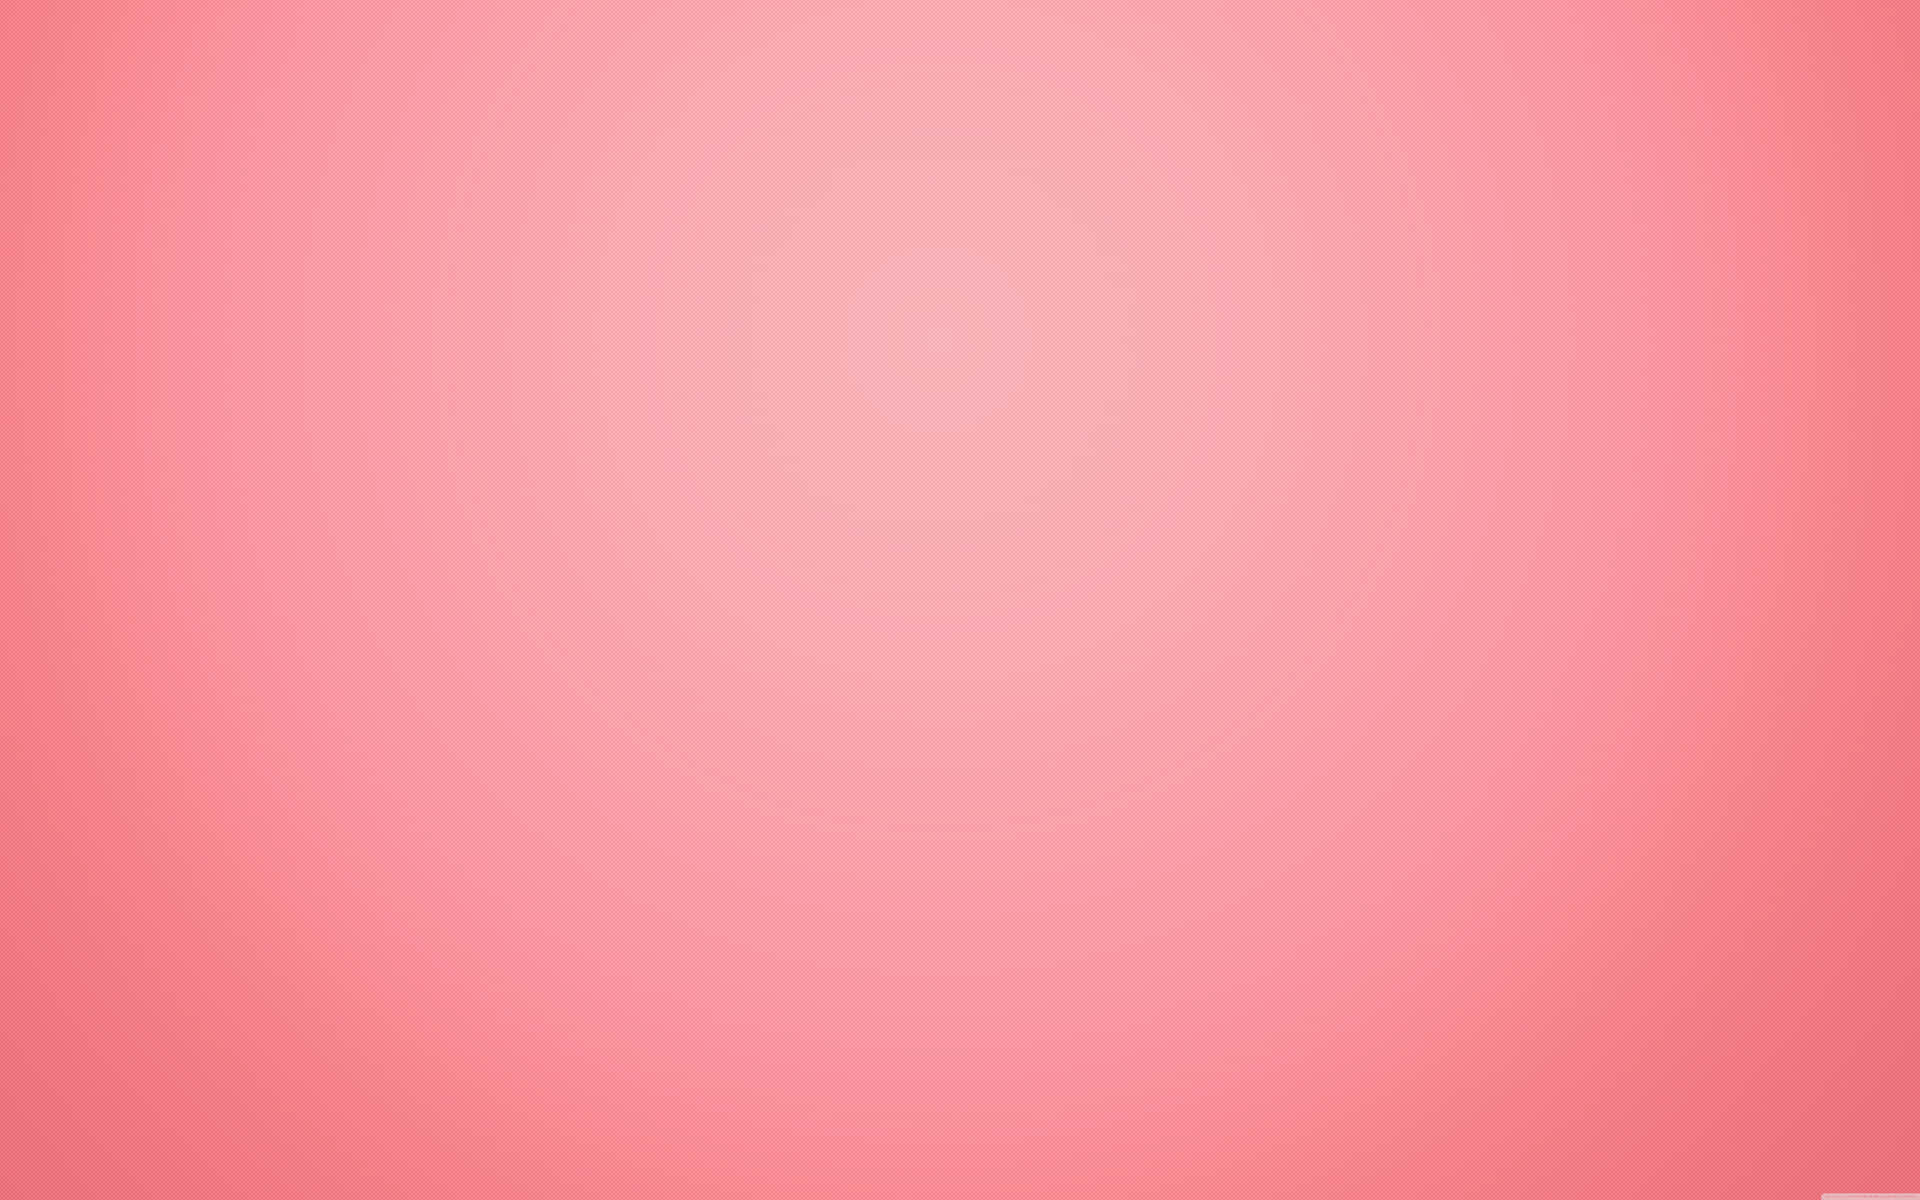 Simple Pink 7680 X 4800 Wallpaper